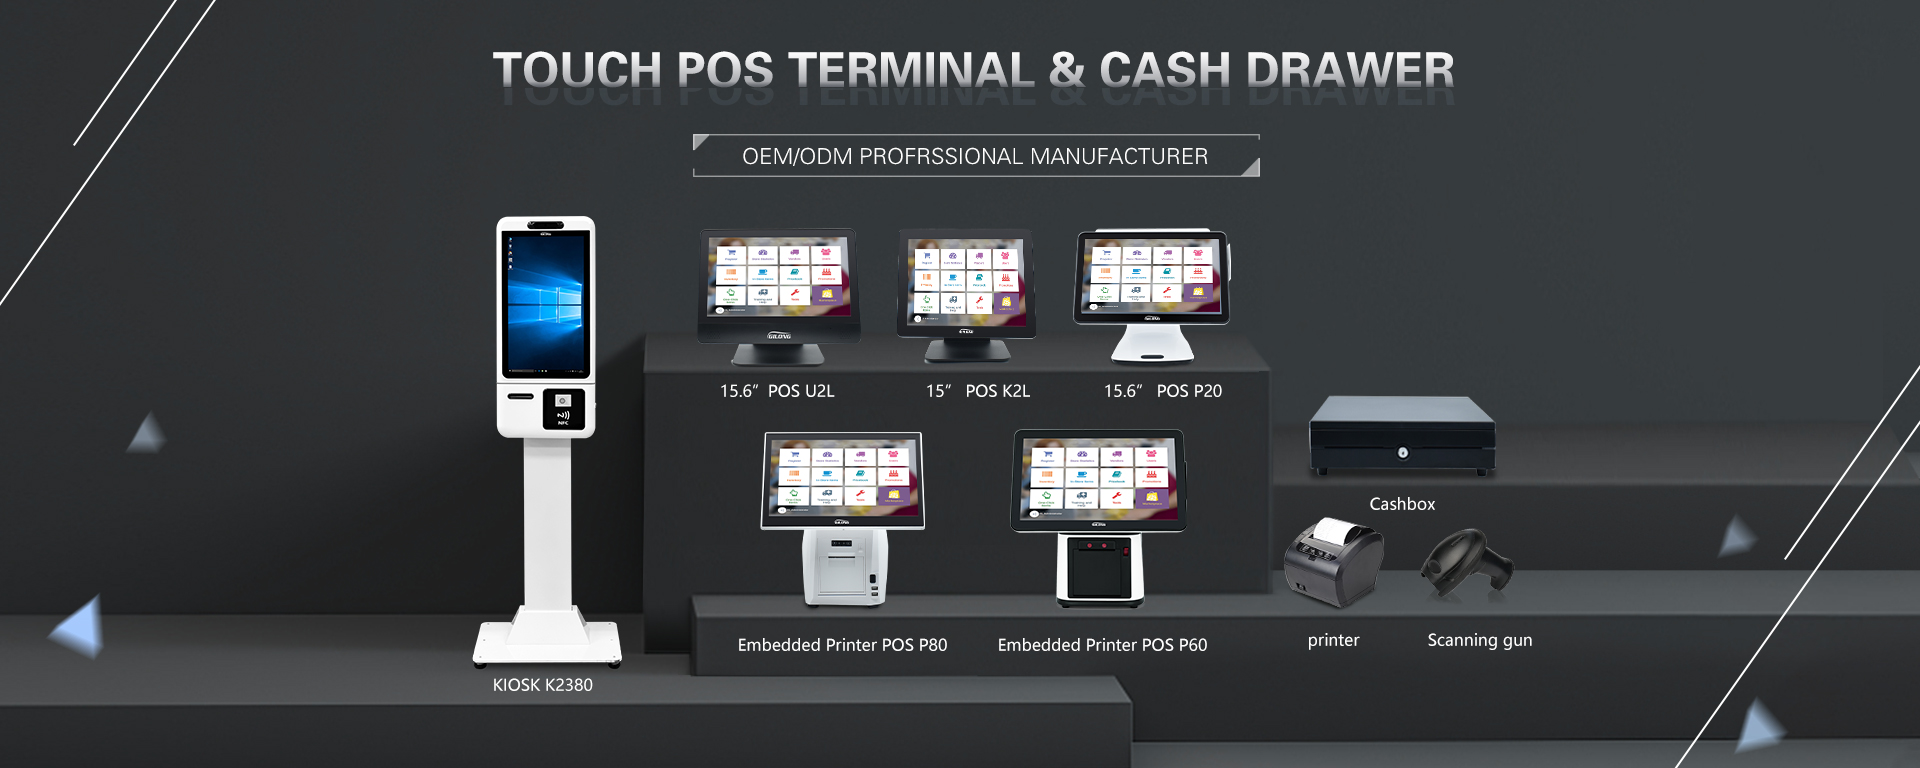 Touch POS Terminal & Cash Drawer